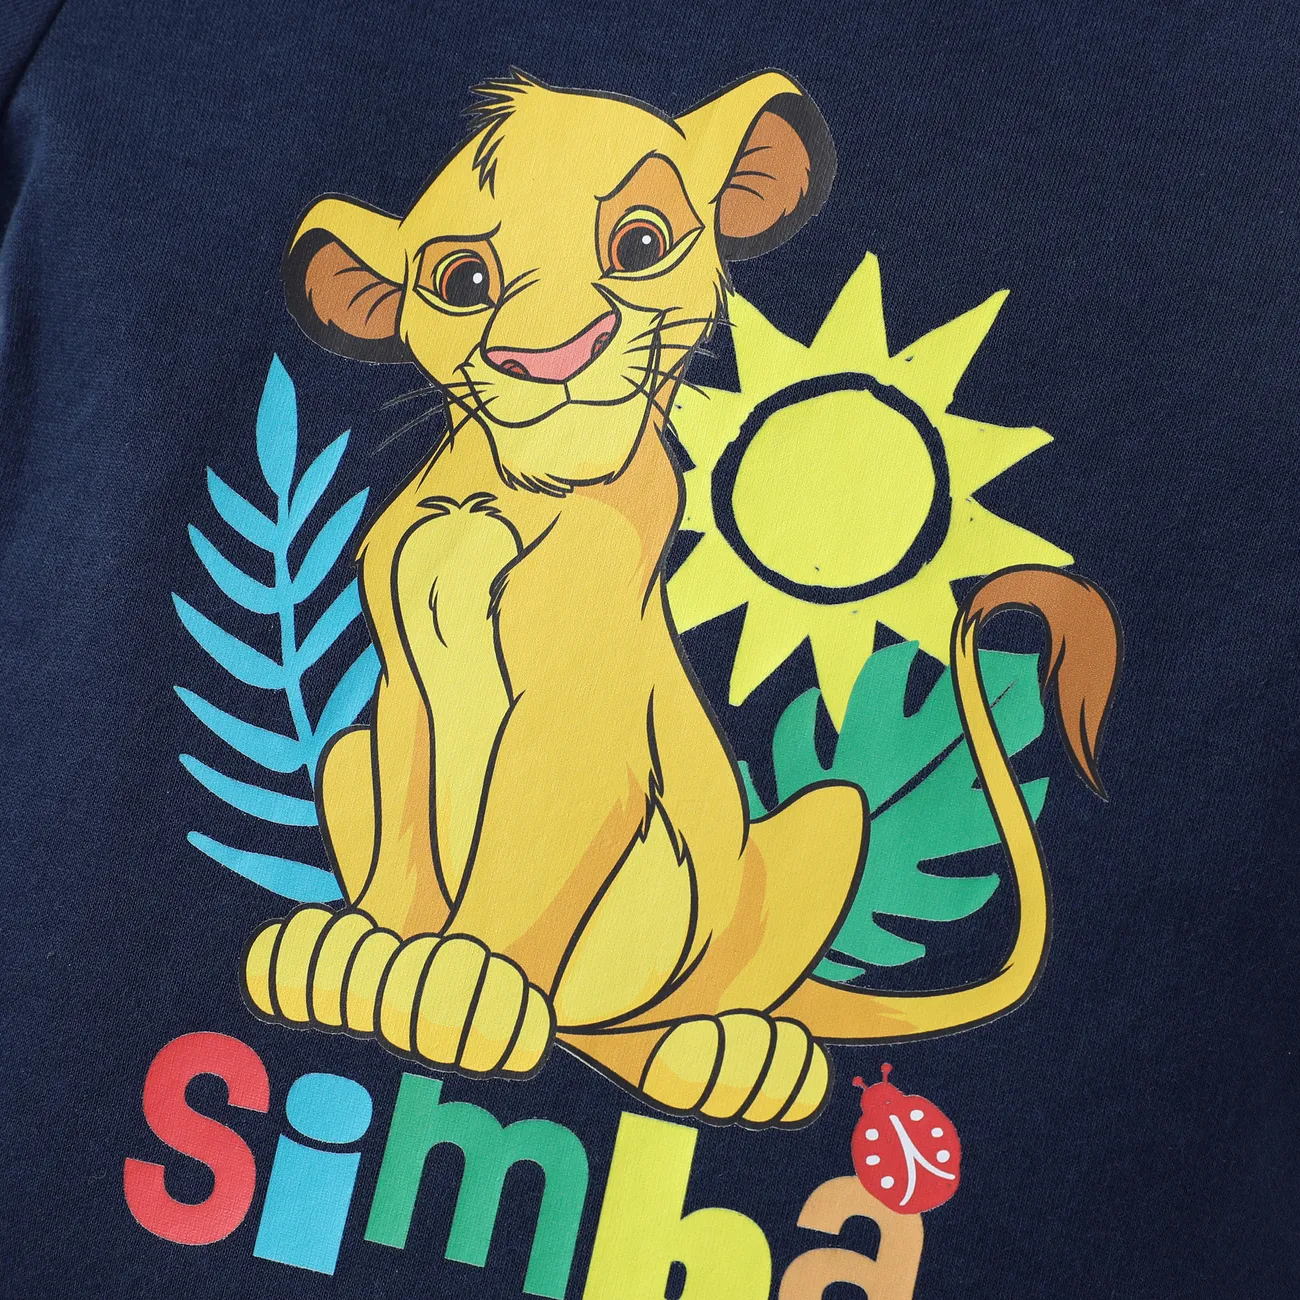 Disney Lion King Baby Boys/Girls Simba 1pc Naia™ Character Print Romper royalblue big image 1